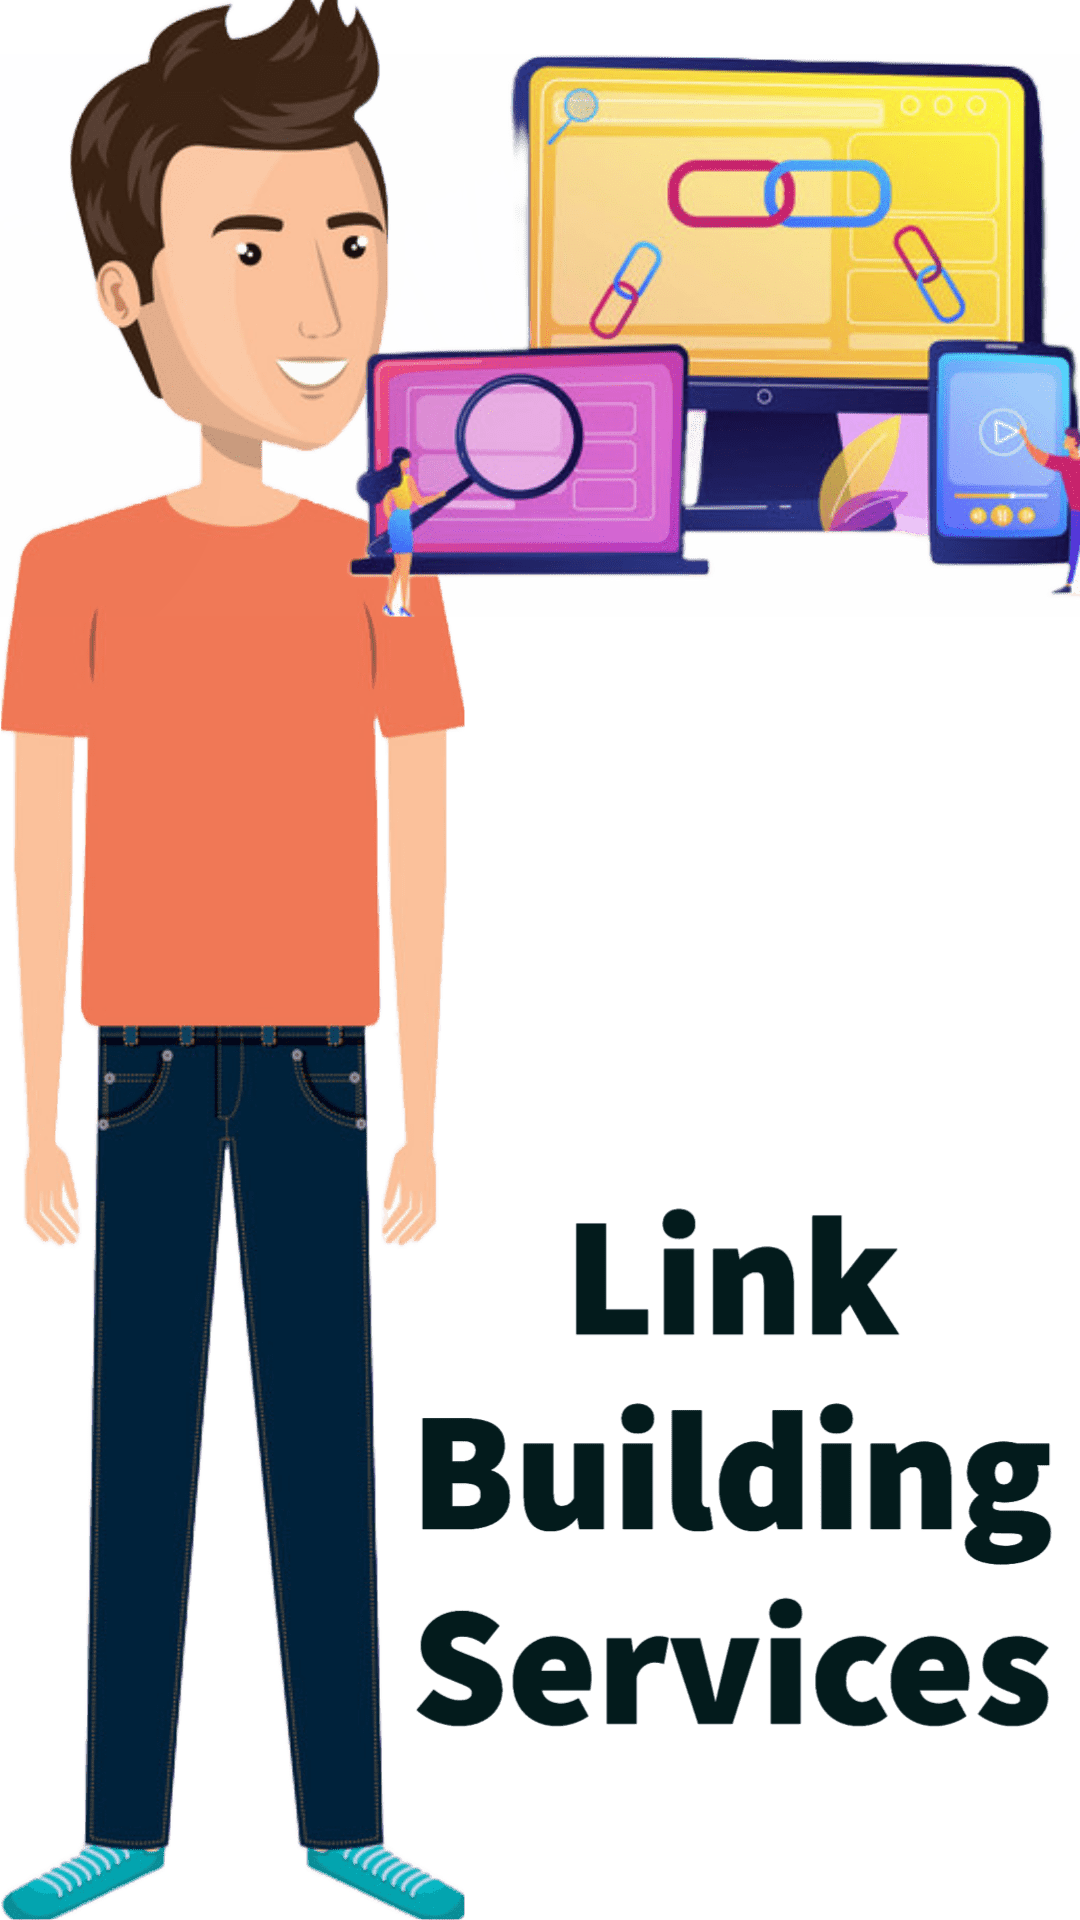 SEO Link Building Service India, Best Link Building Company India, Link Building Agencies India, Link Building services, Hire Link Builder